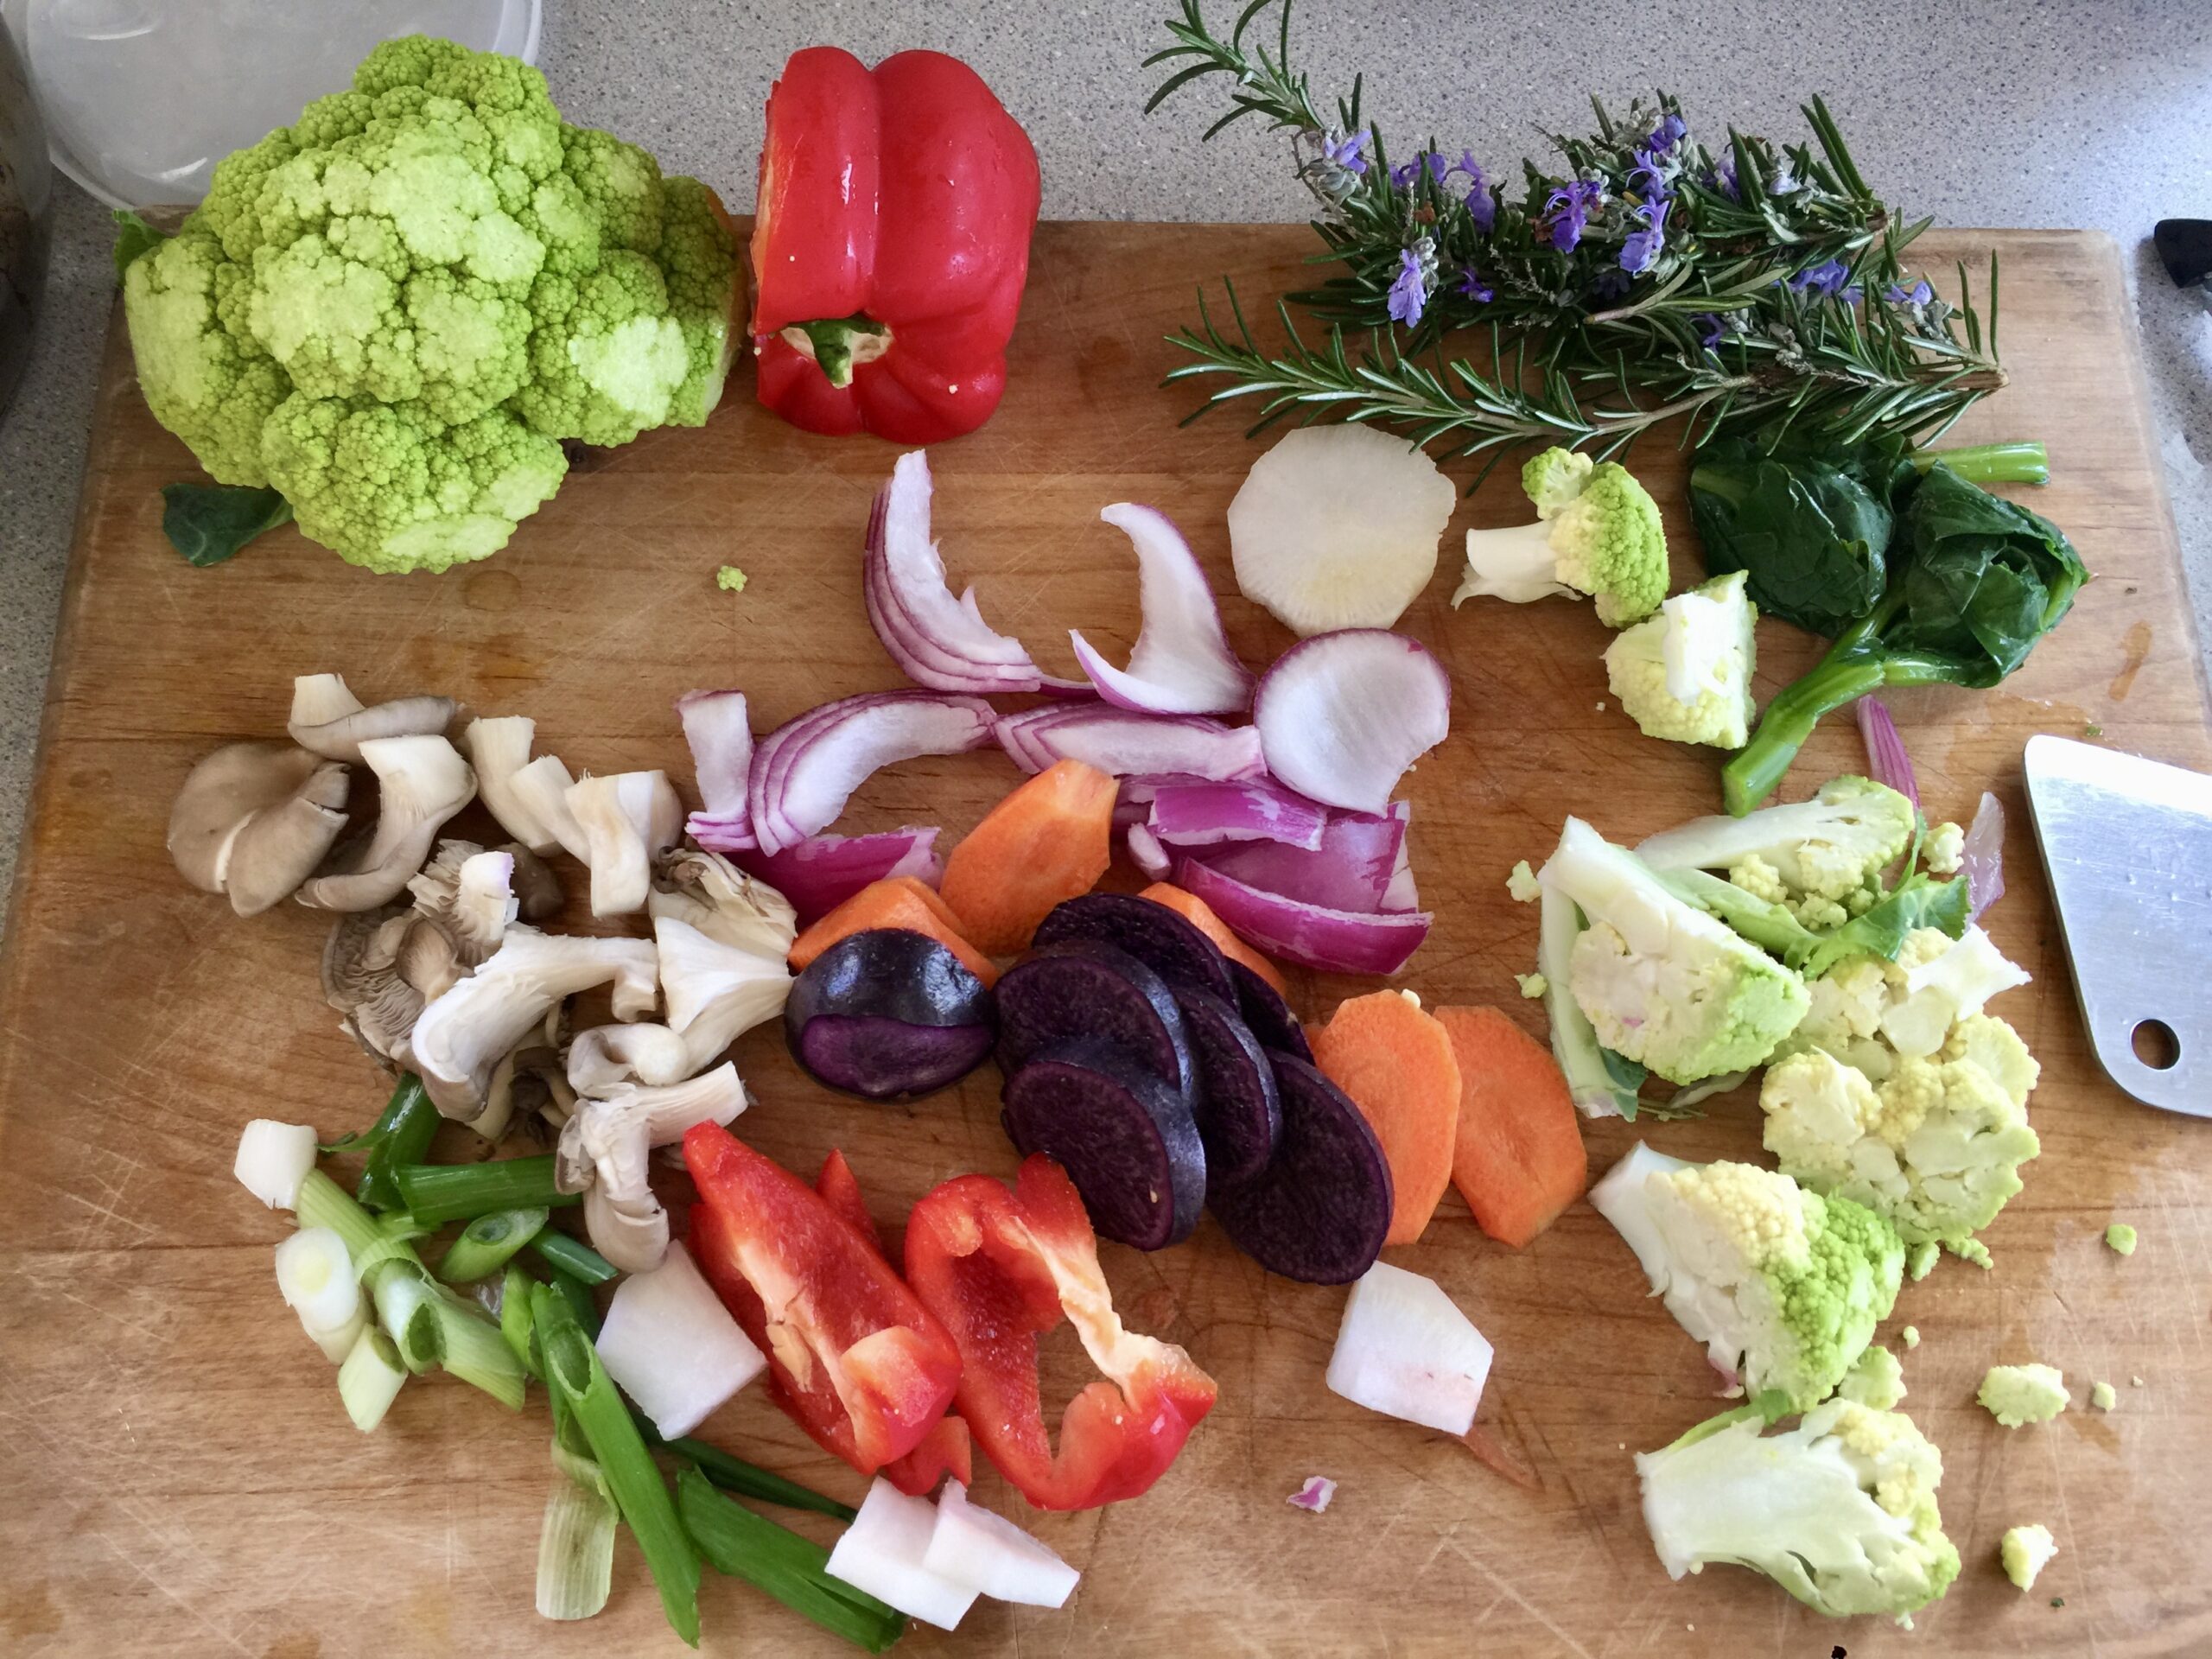 Vegetable prep with bright colored vegetables, purple potato, green cauliflower